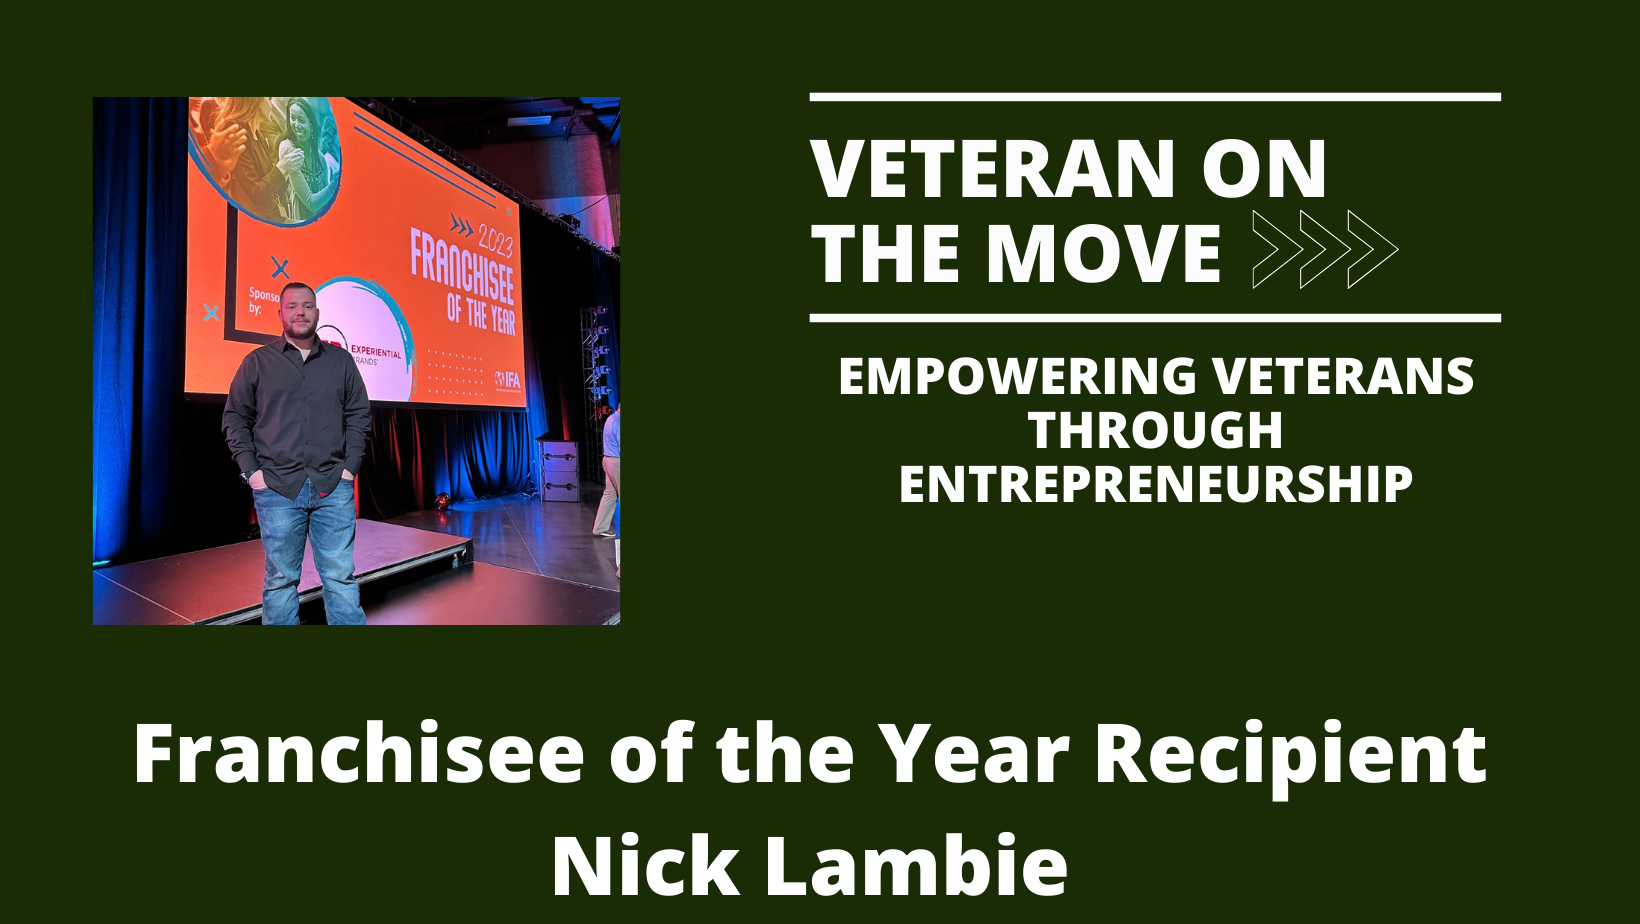 Nick Lambie: Veteran On the Move